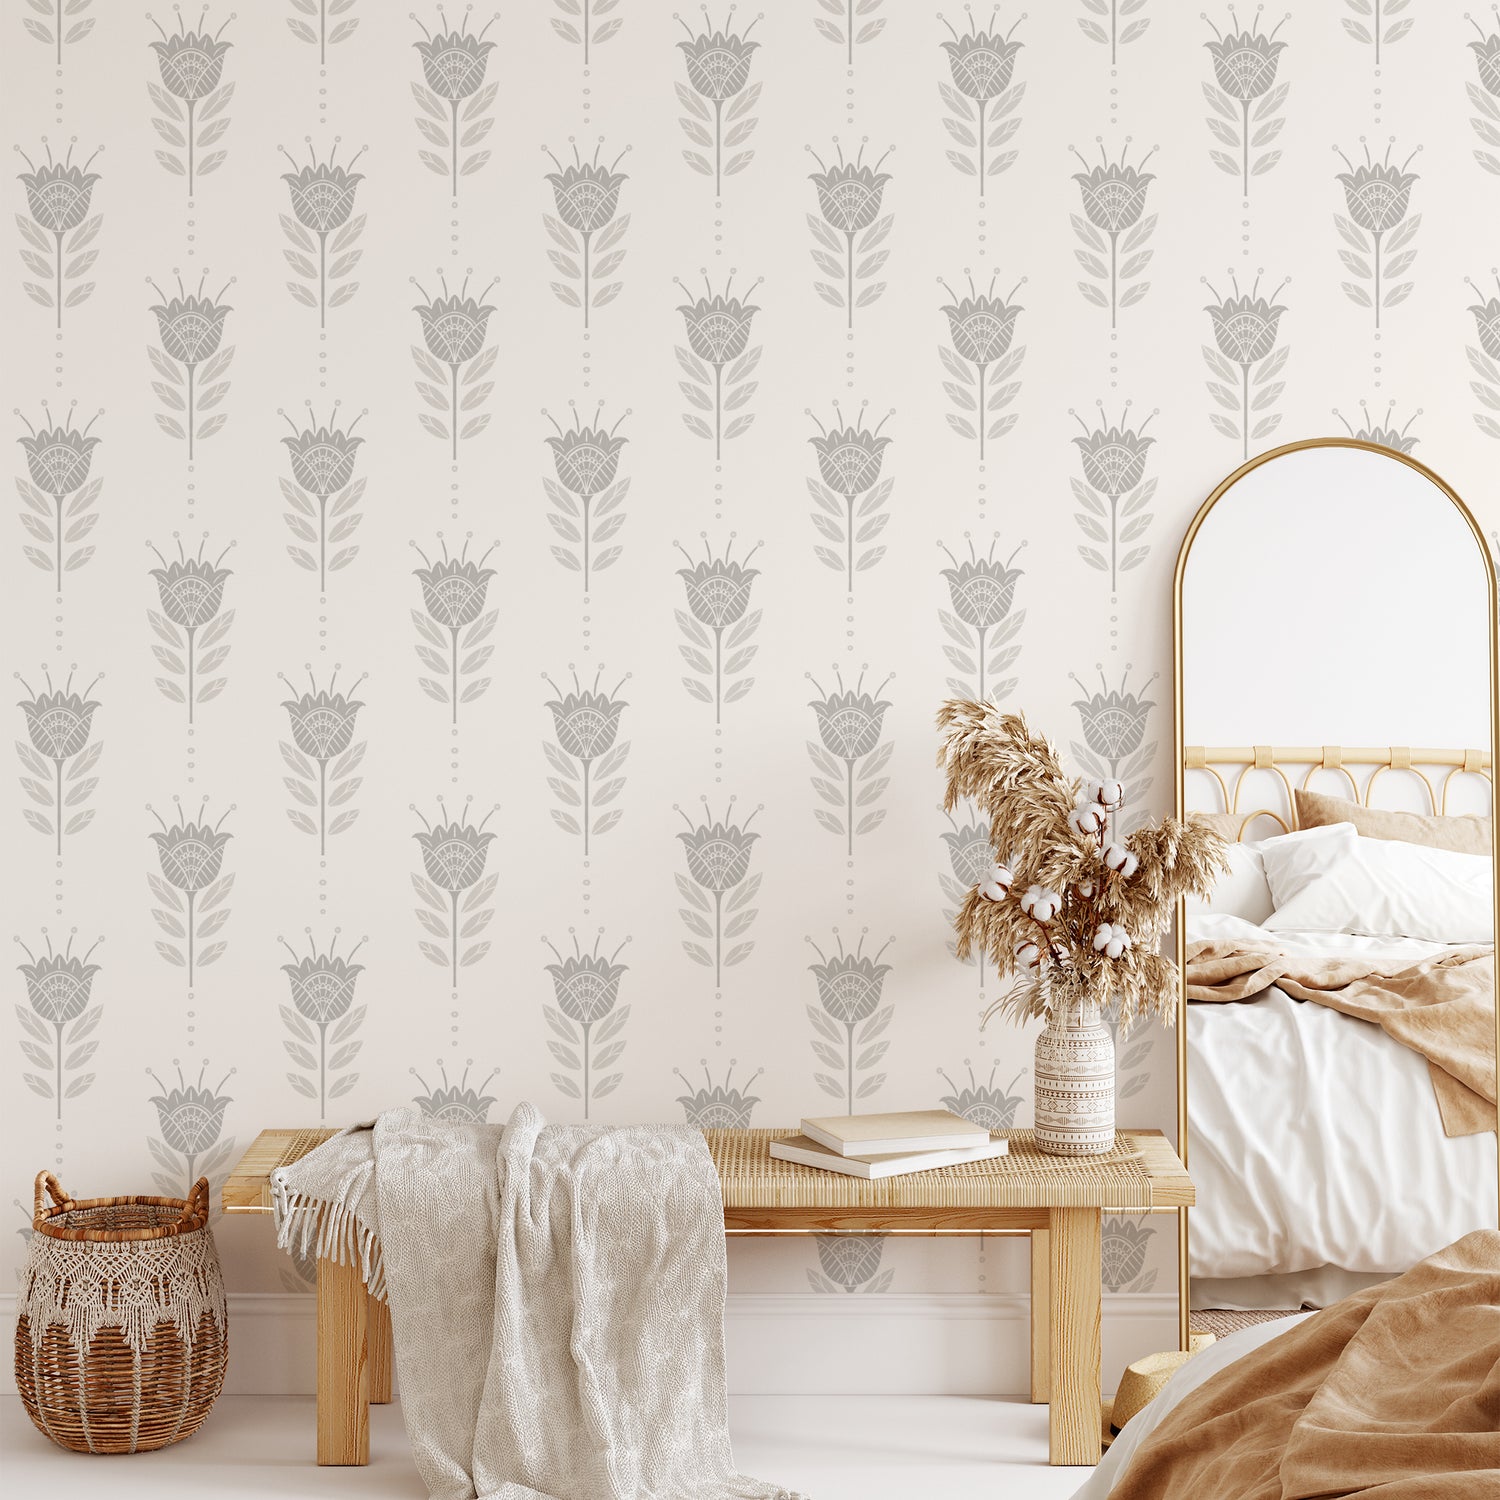 Tulips Wallpaper in Gray shown in a bedroom.